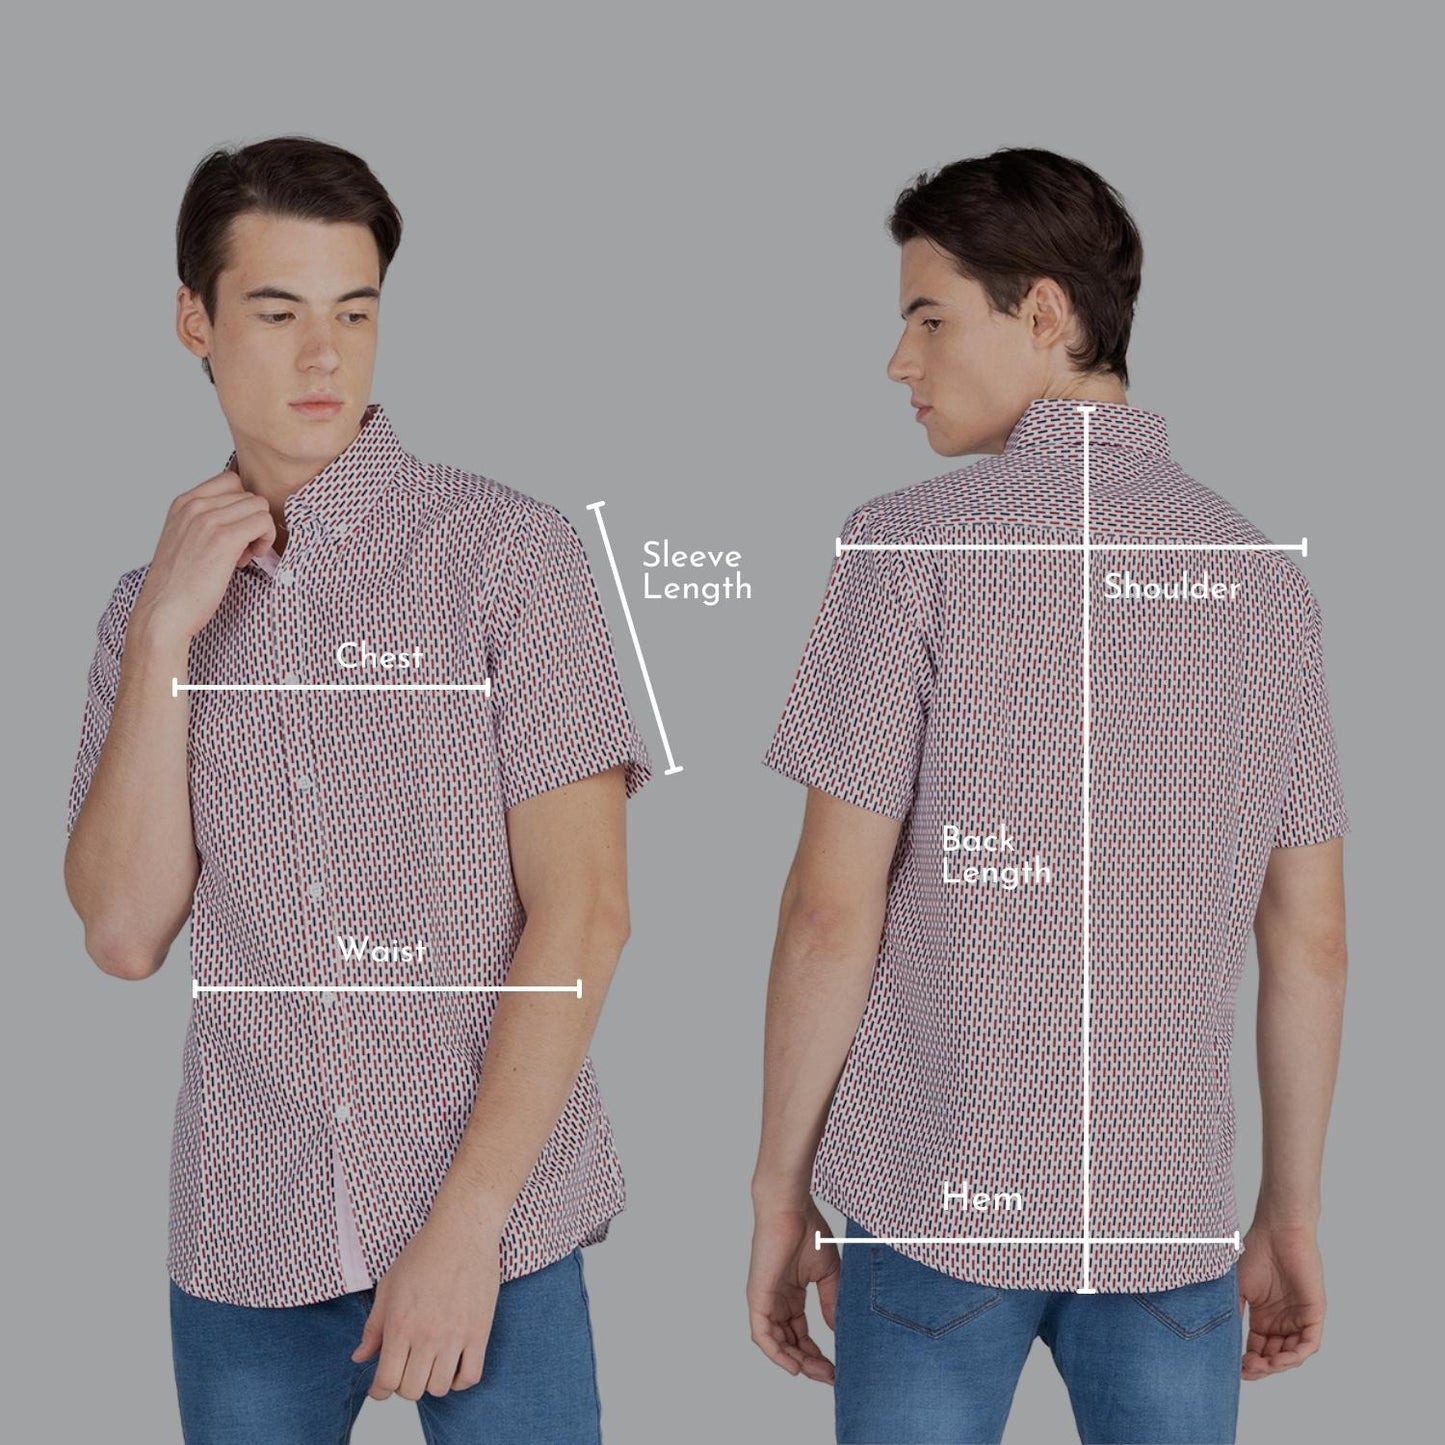 K1555 Mens REGULAR FIT Heritage Prints Button Down Short Sleeve Shirt - IDENTITY Apparel Shop